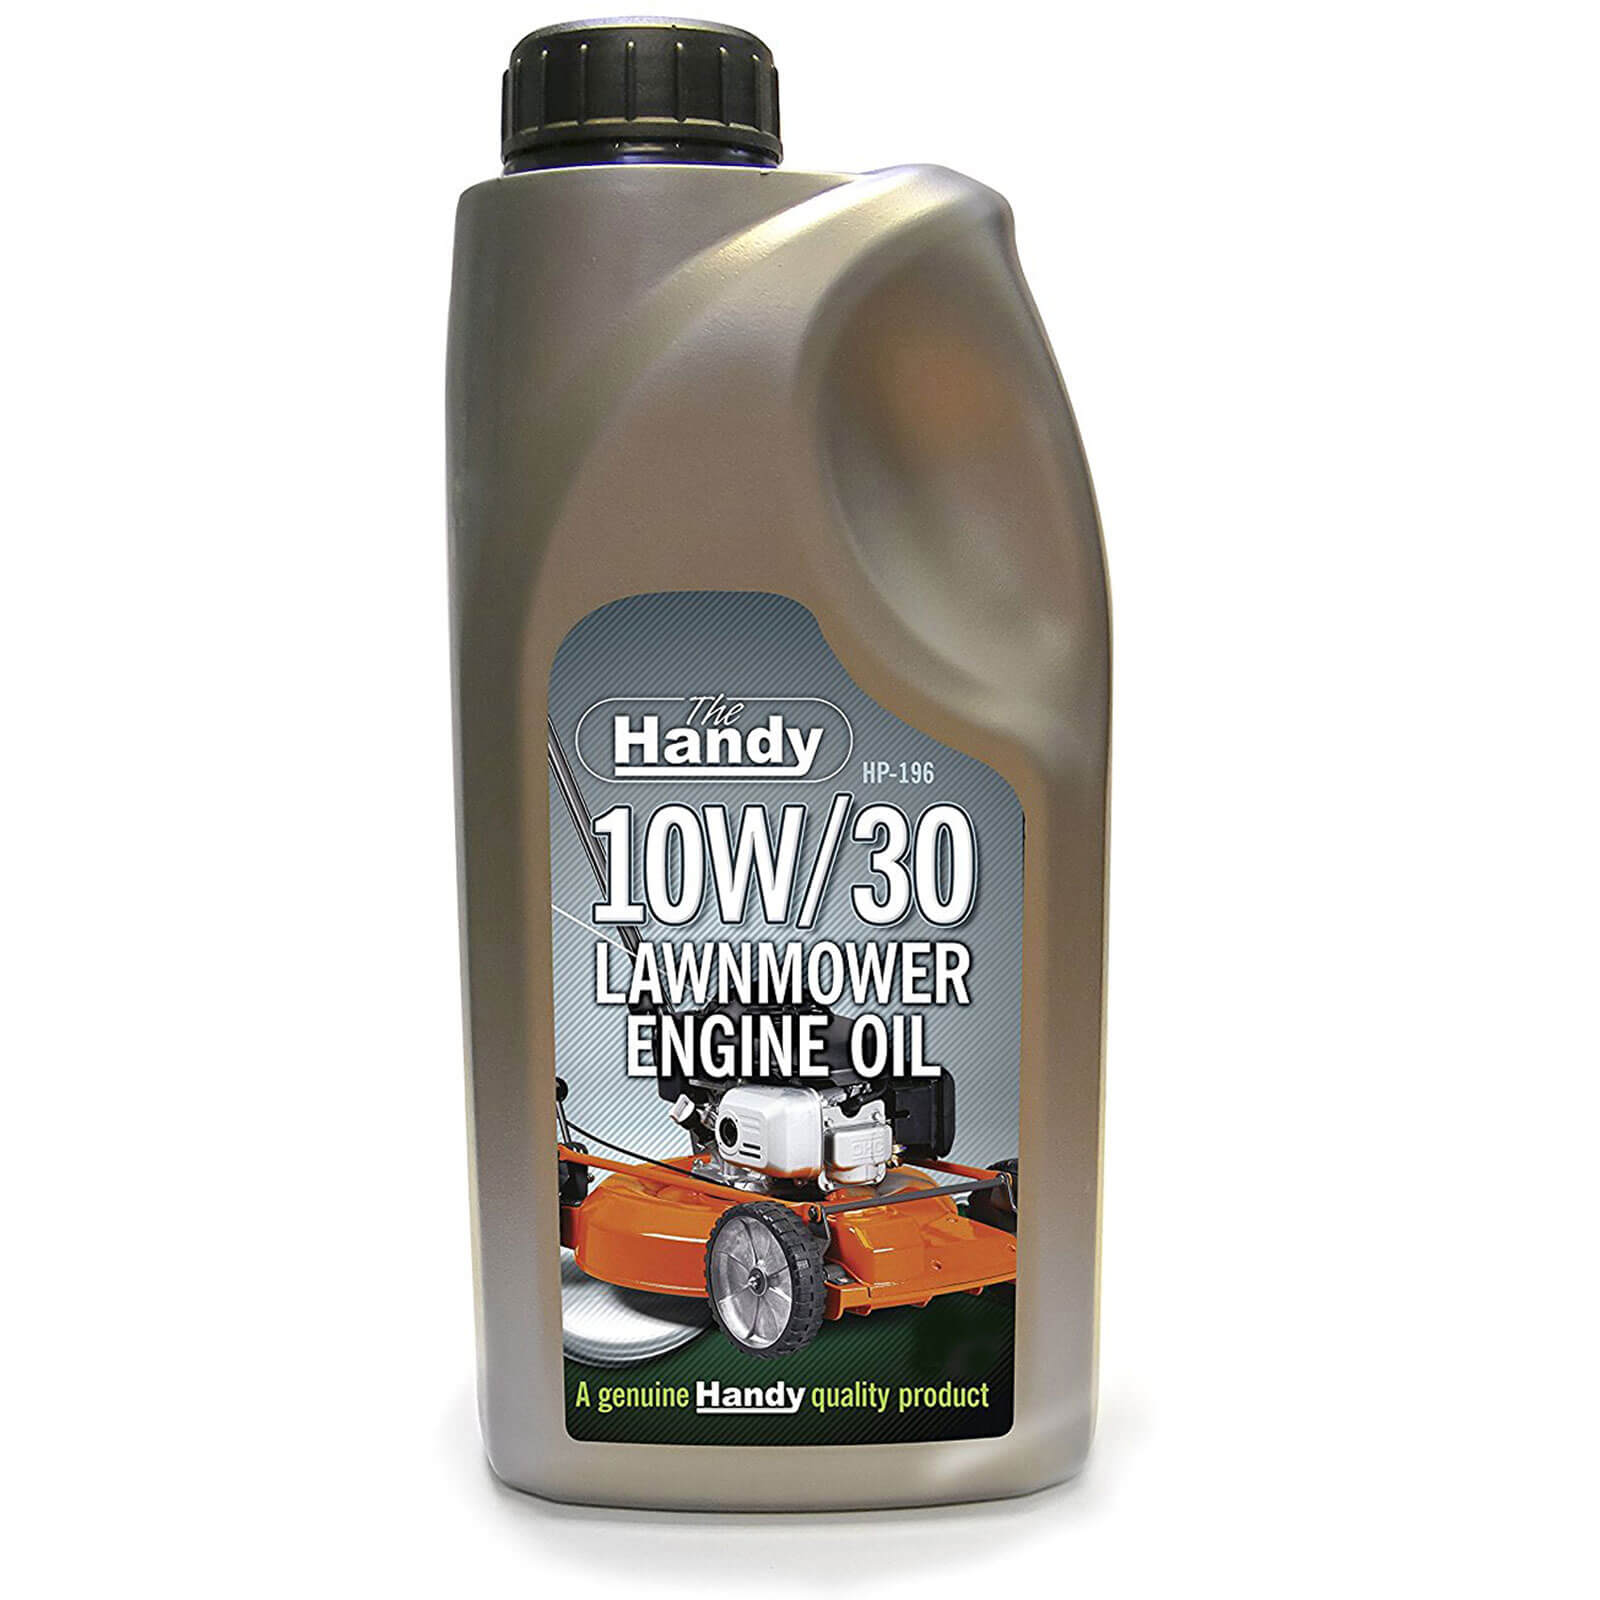 Image of Handy 10W/30 Lawnmower Engine Oil 600ml